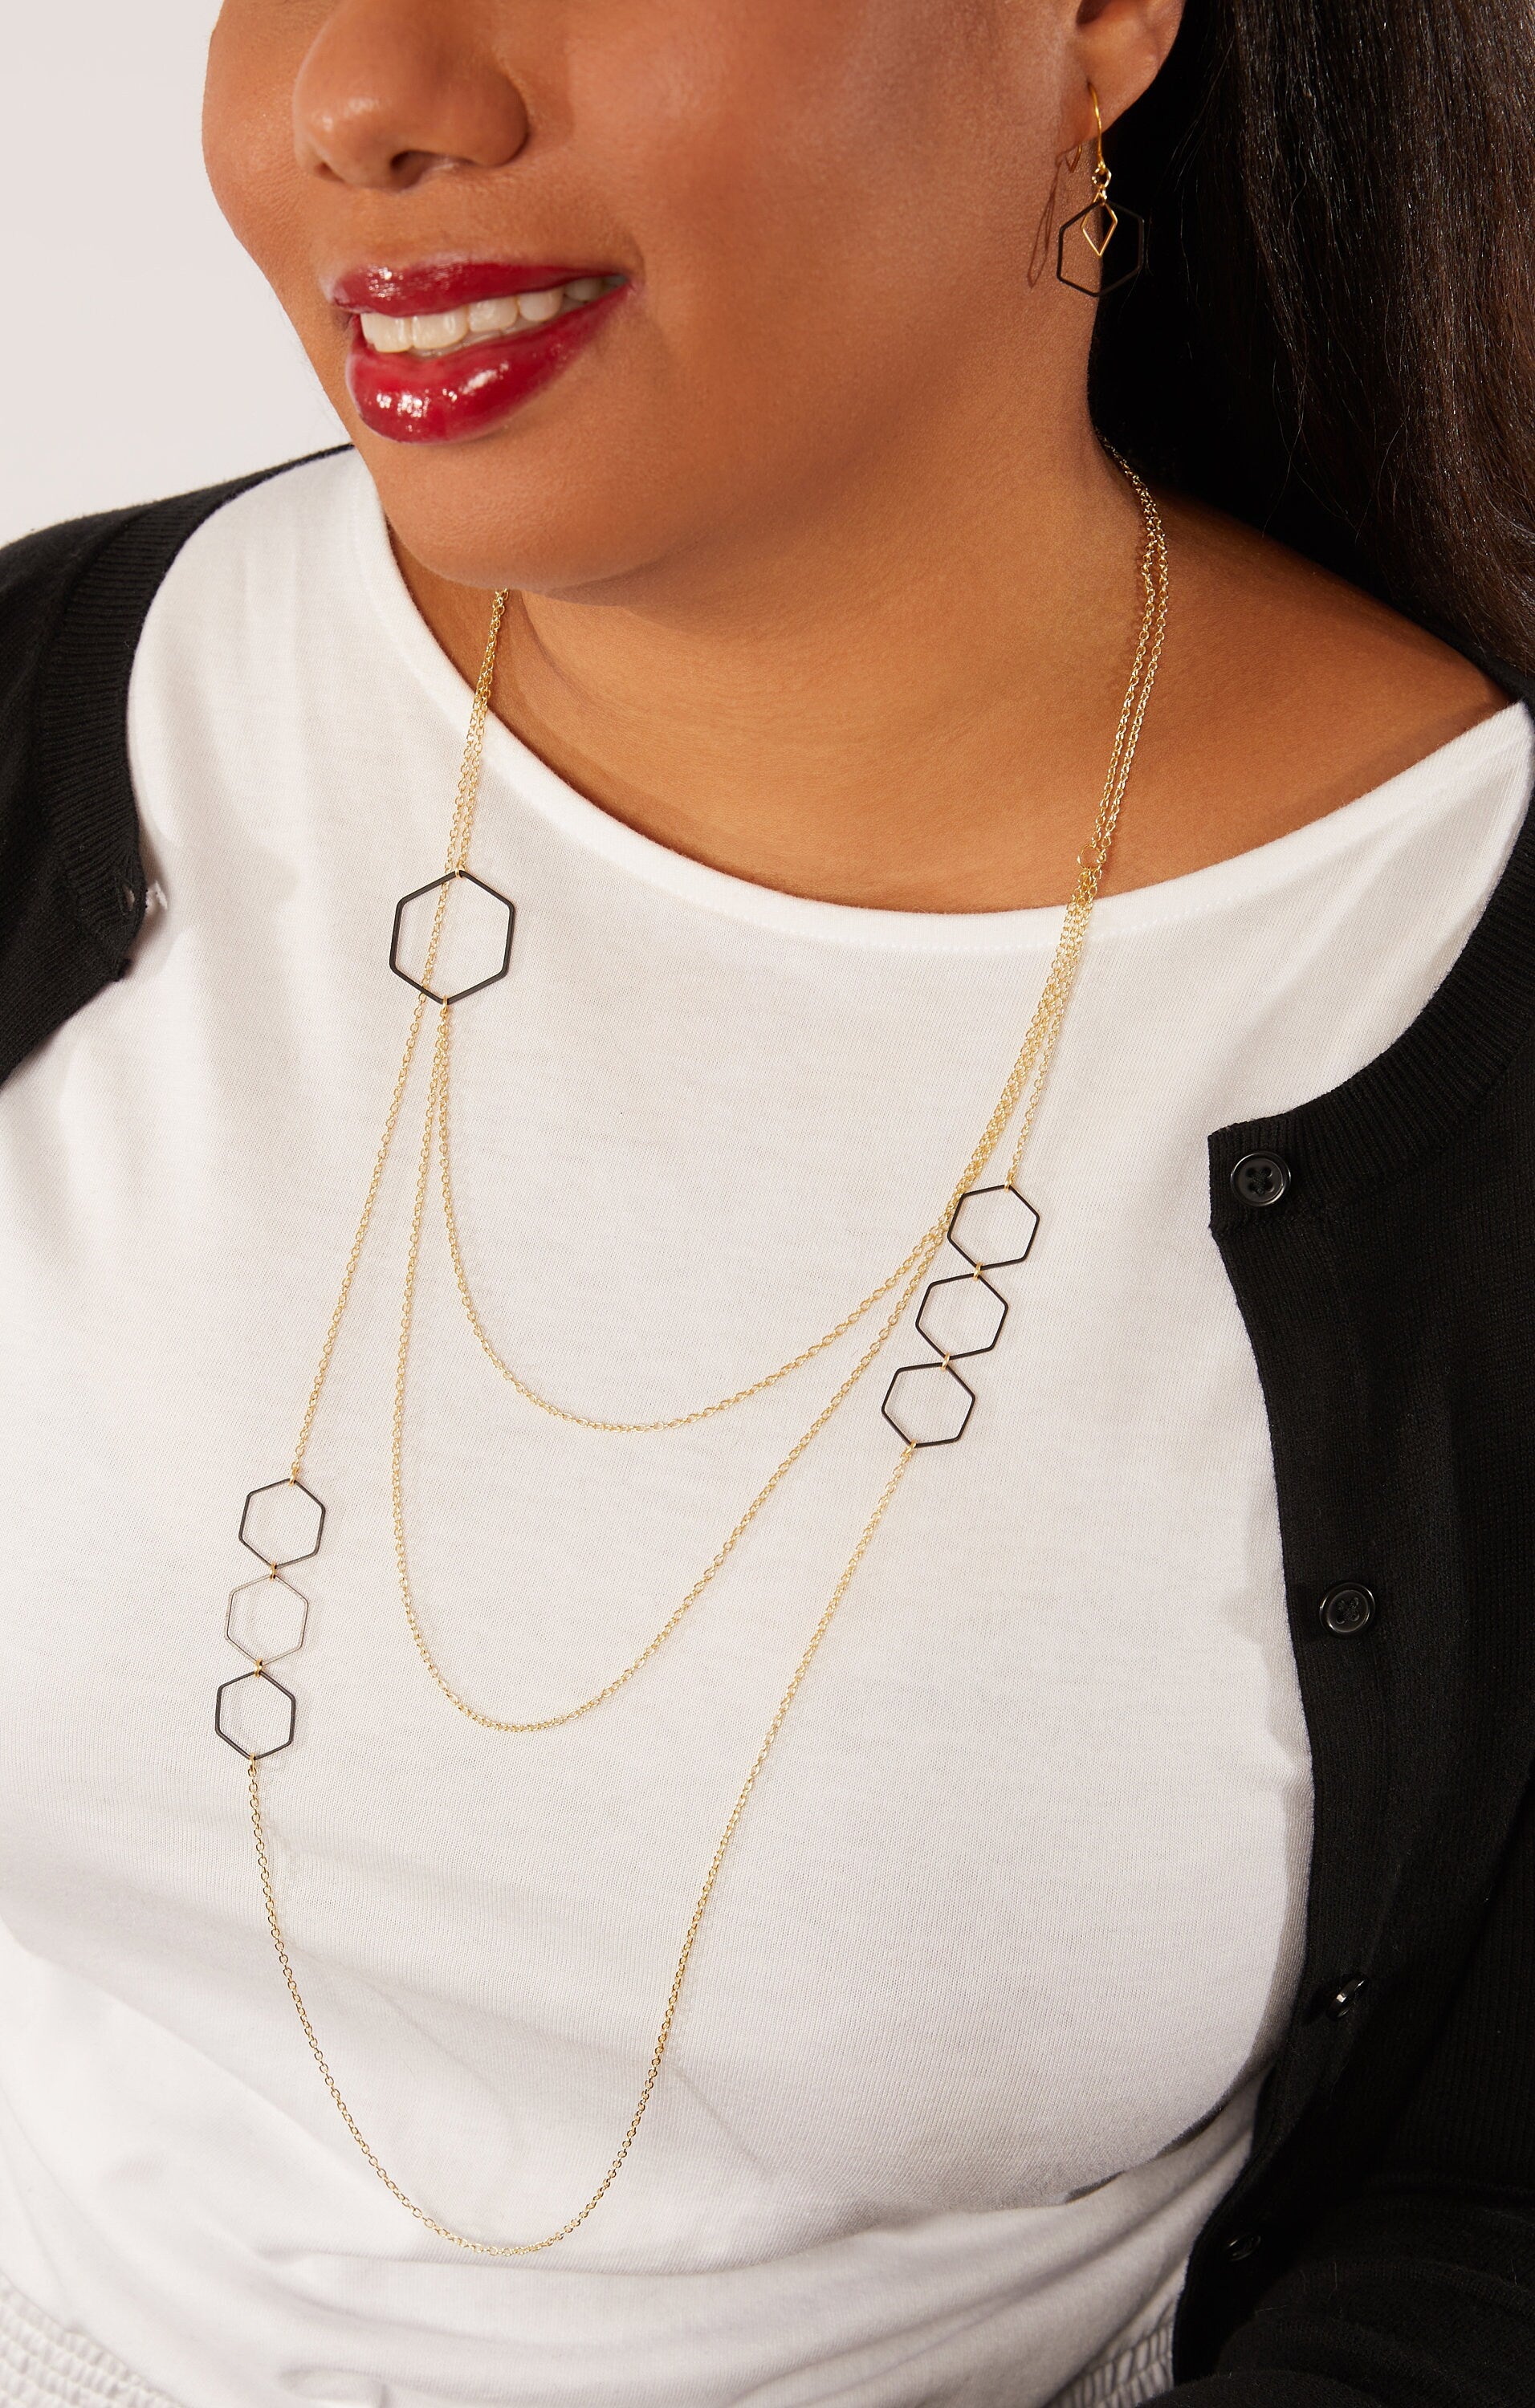 "Le Contour" Layered Black & Gold Hexagon Necklace For Women